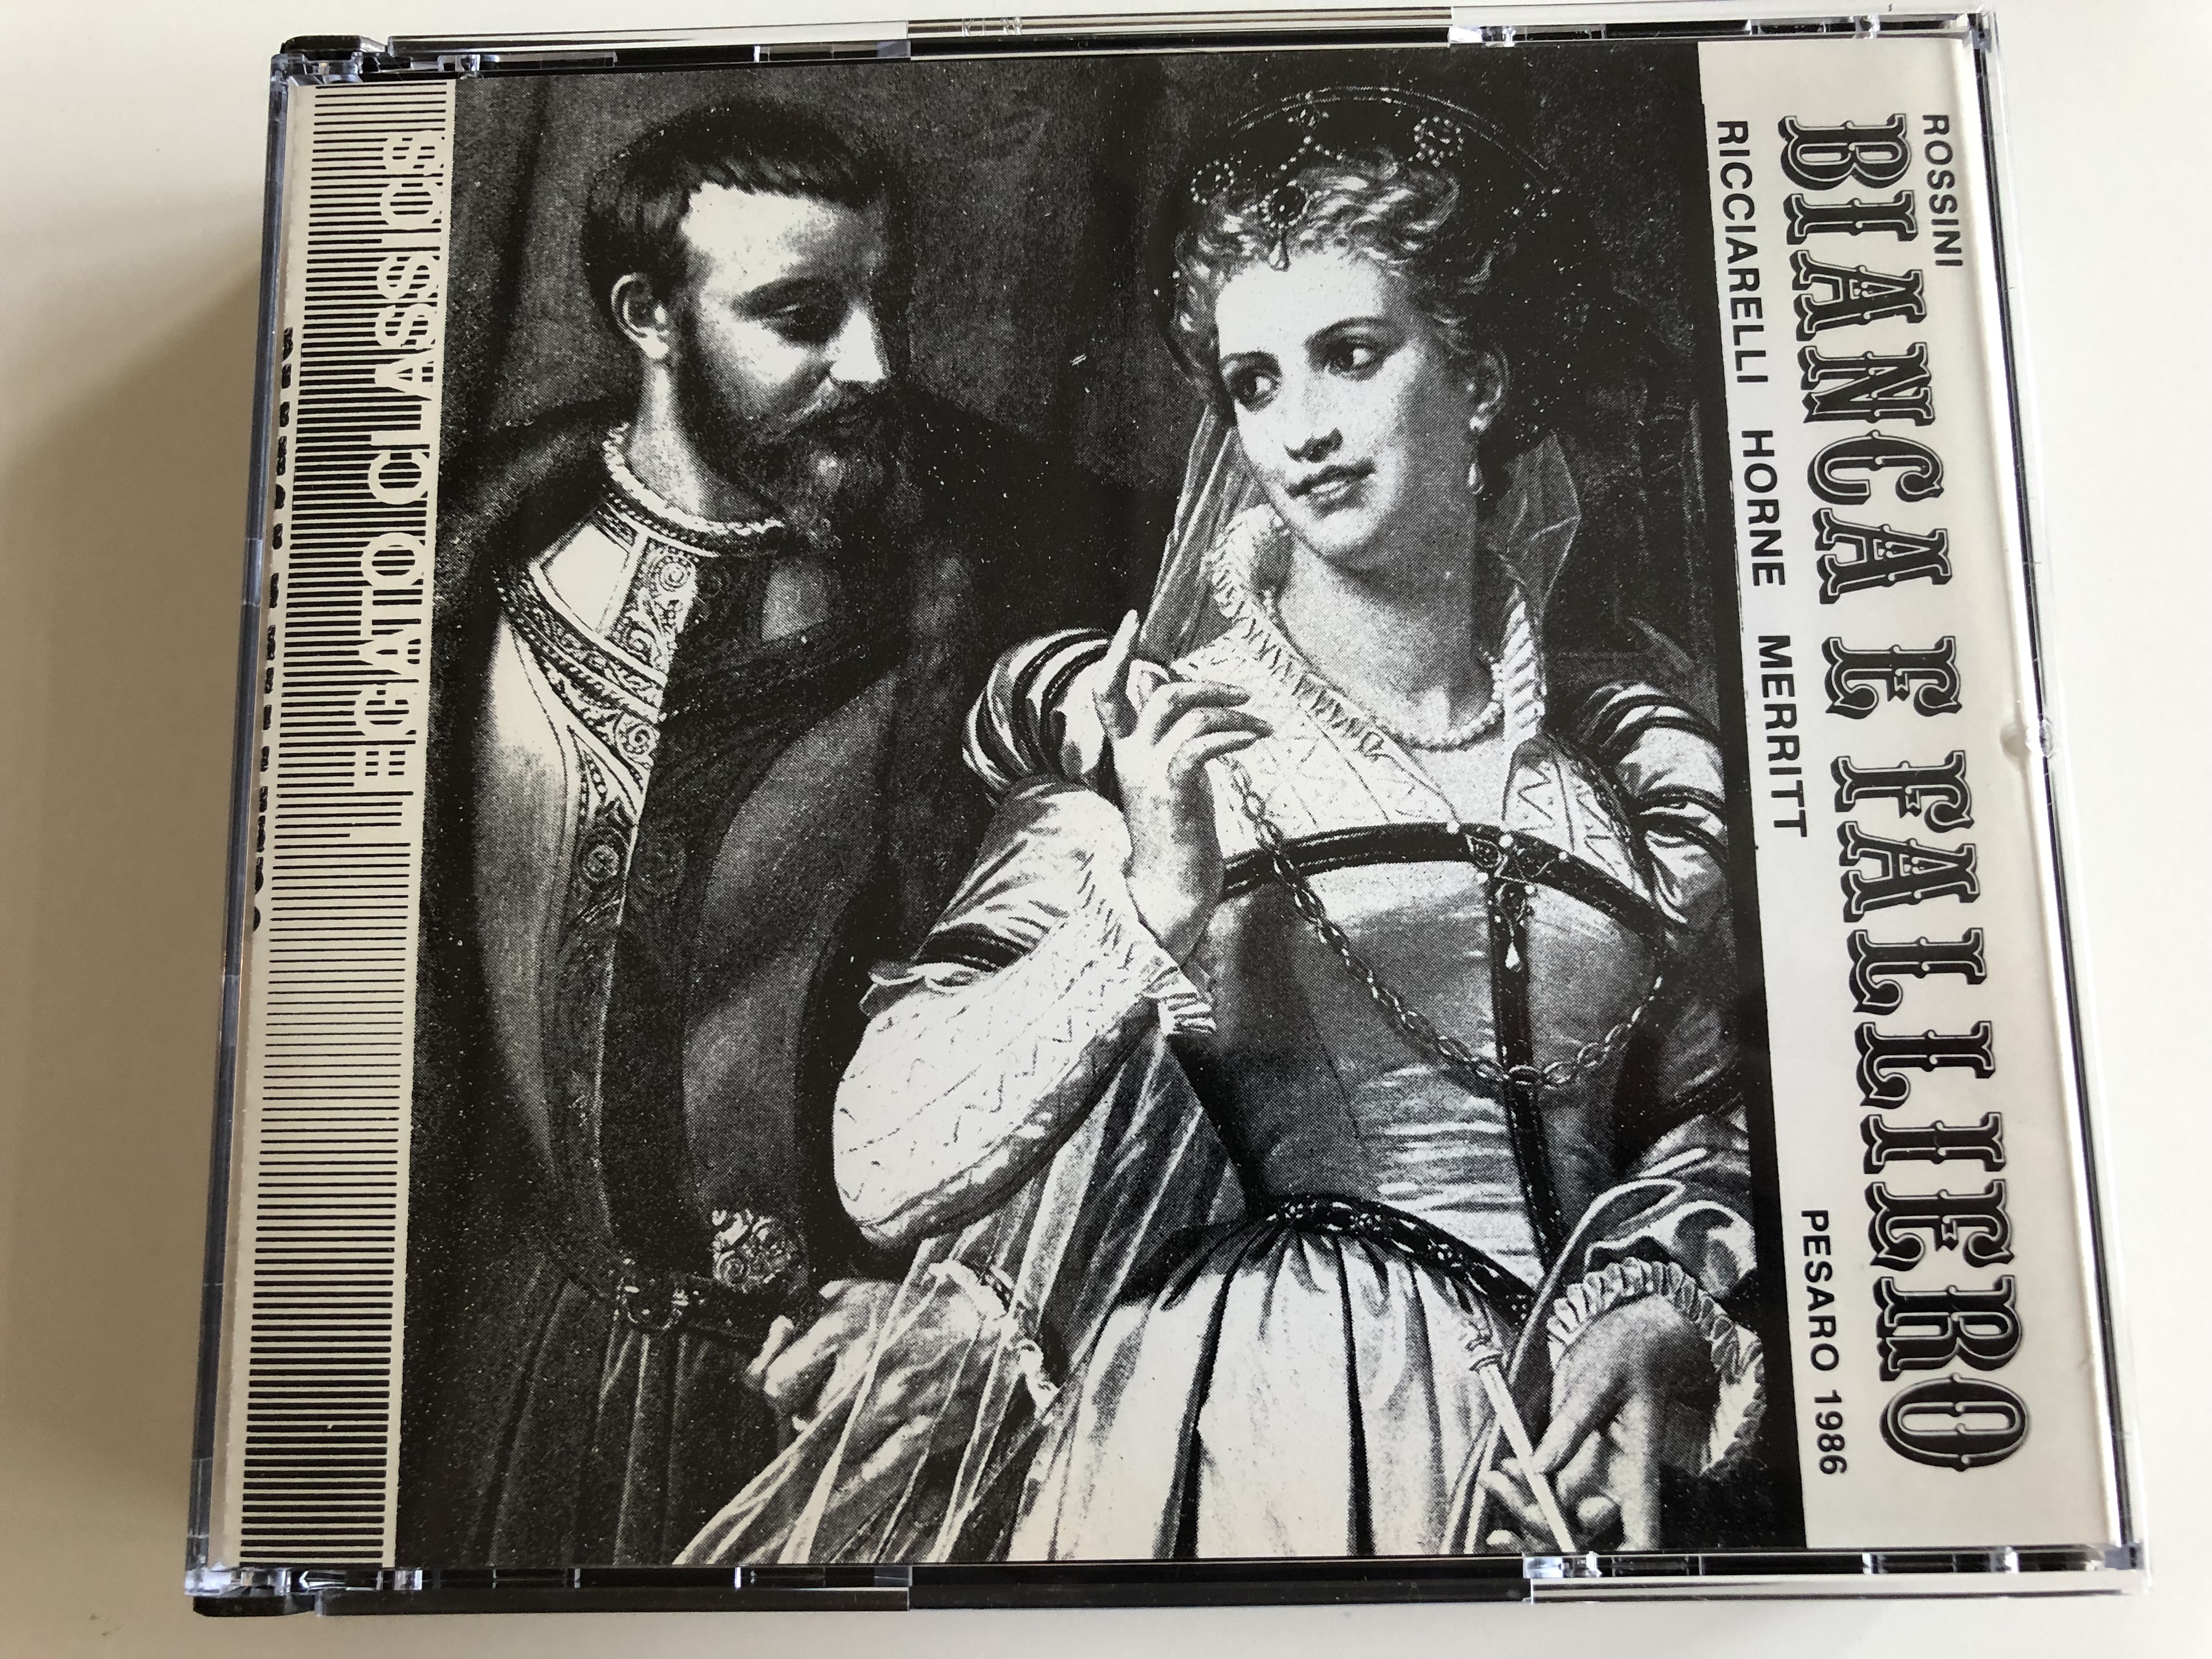 rossini-bianca-e-falliero-ricciarelli-horne-merritt-pesaro-1986-legato-classics-audio-cd-box-3-discs-lcd-138-3-1-.jpg